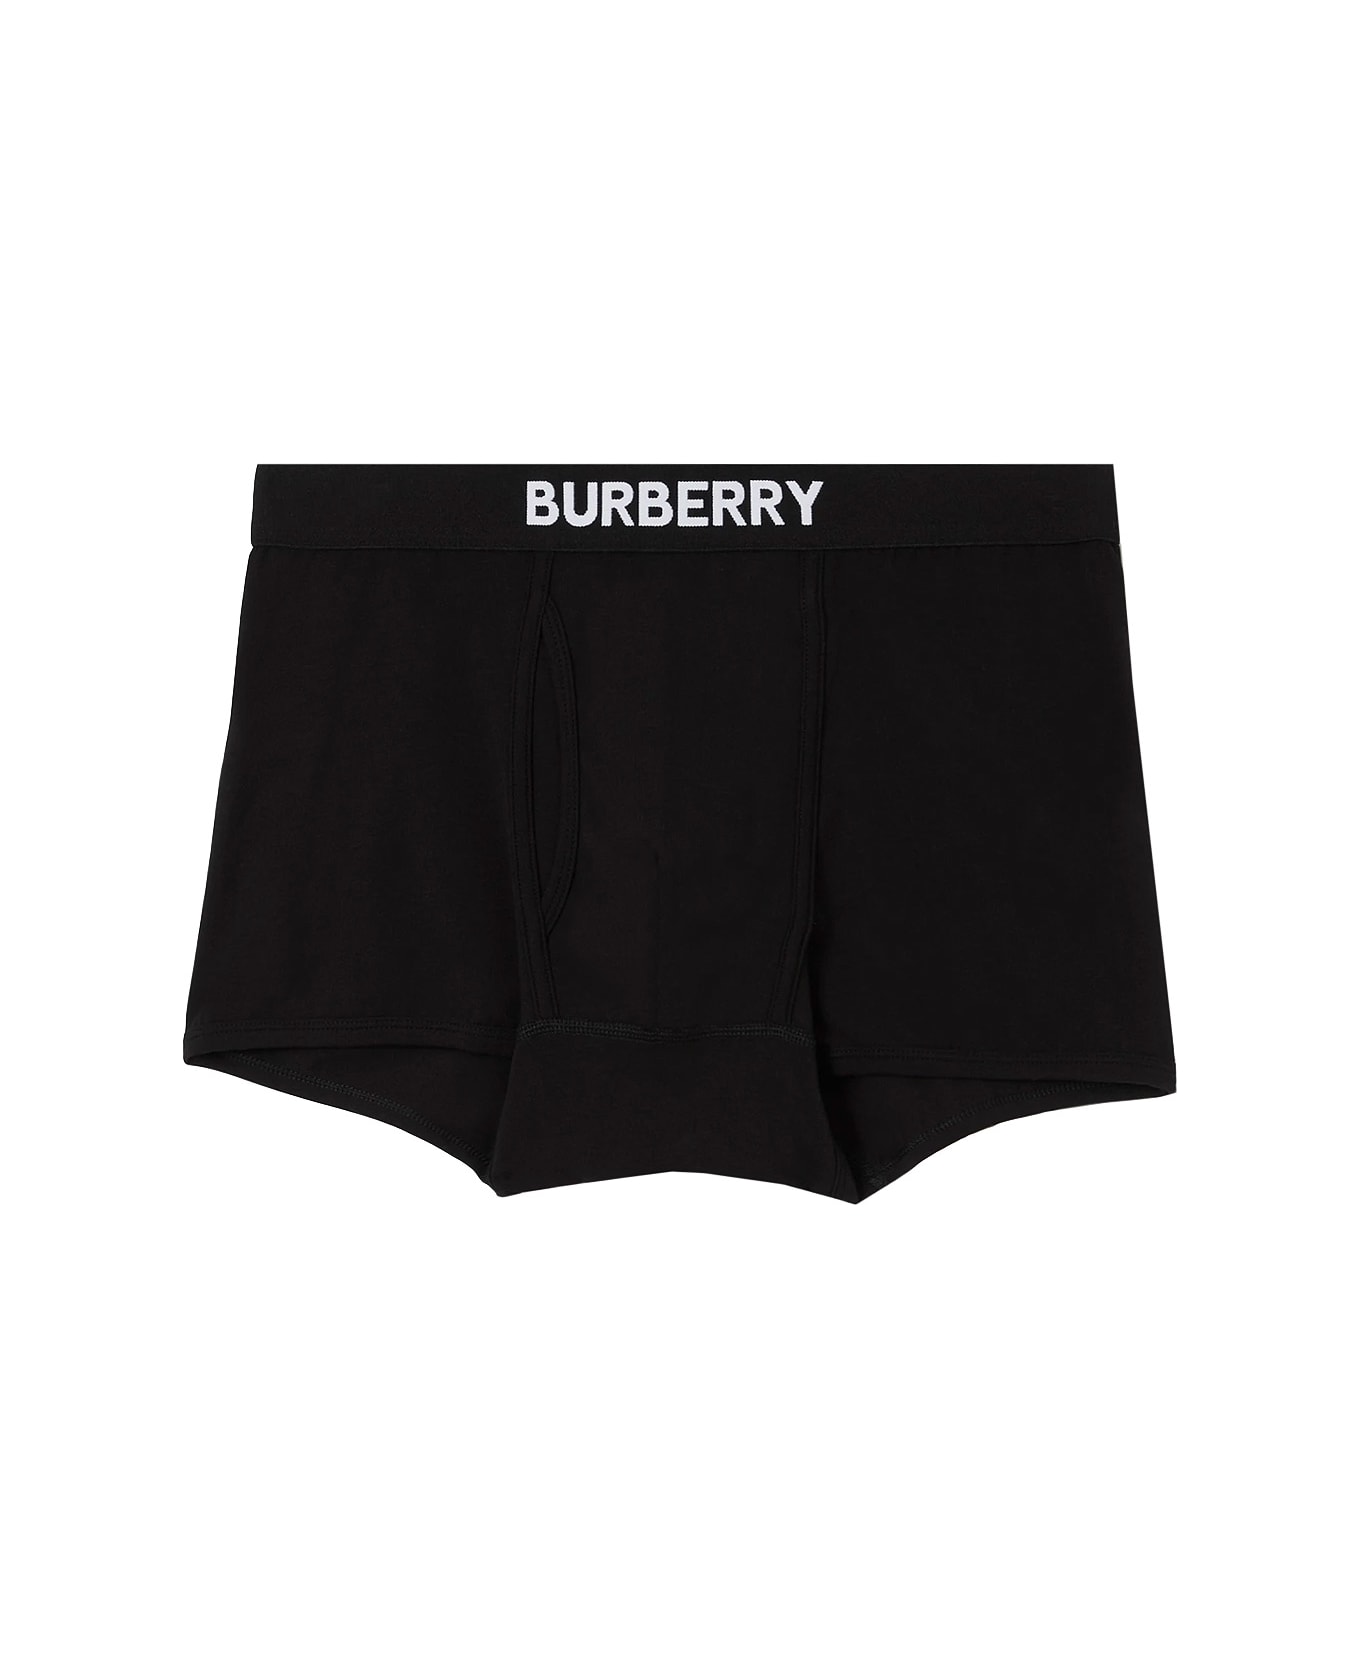 Burberry Boxer - Black